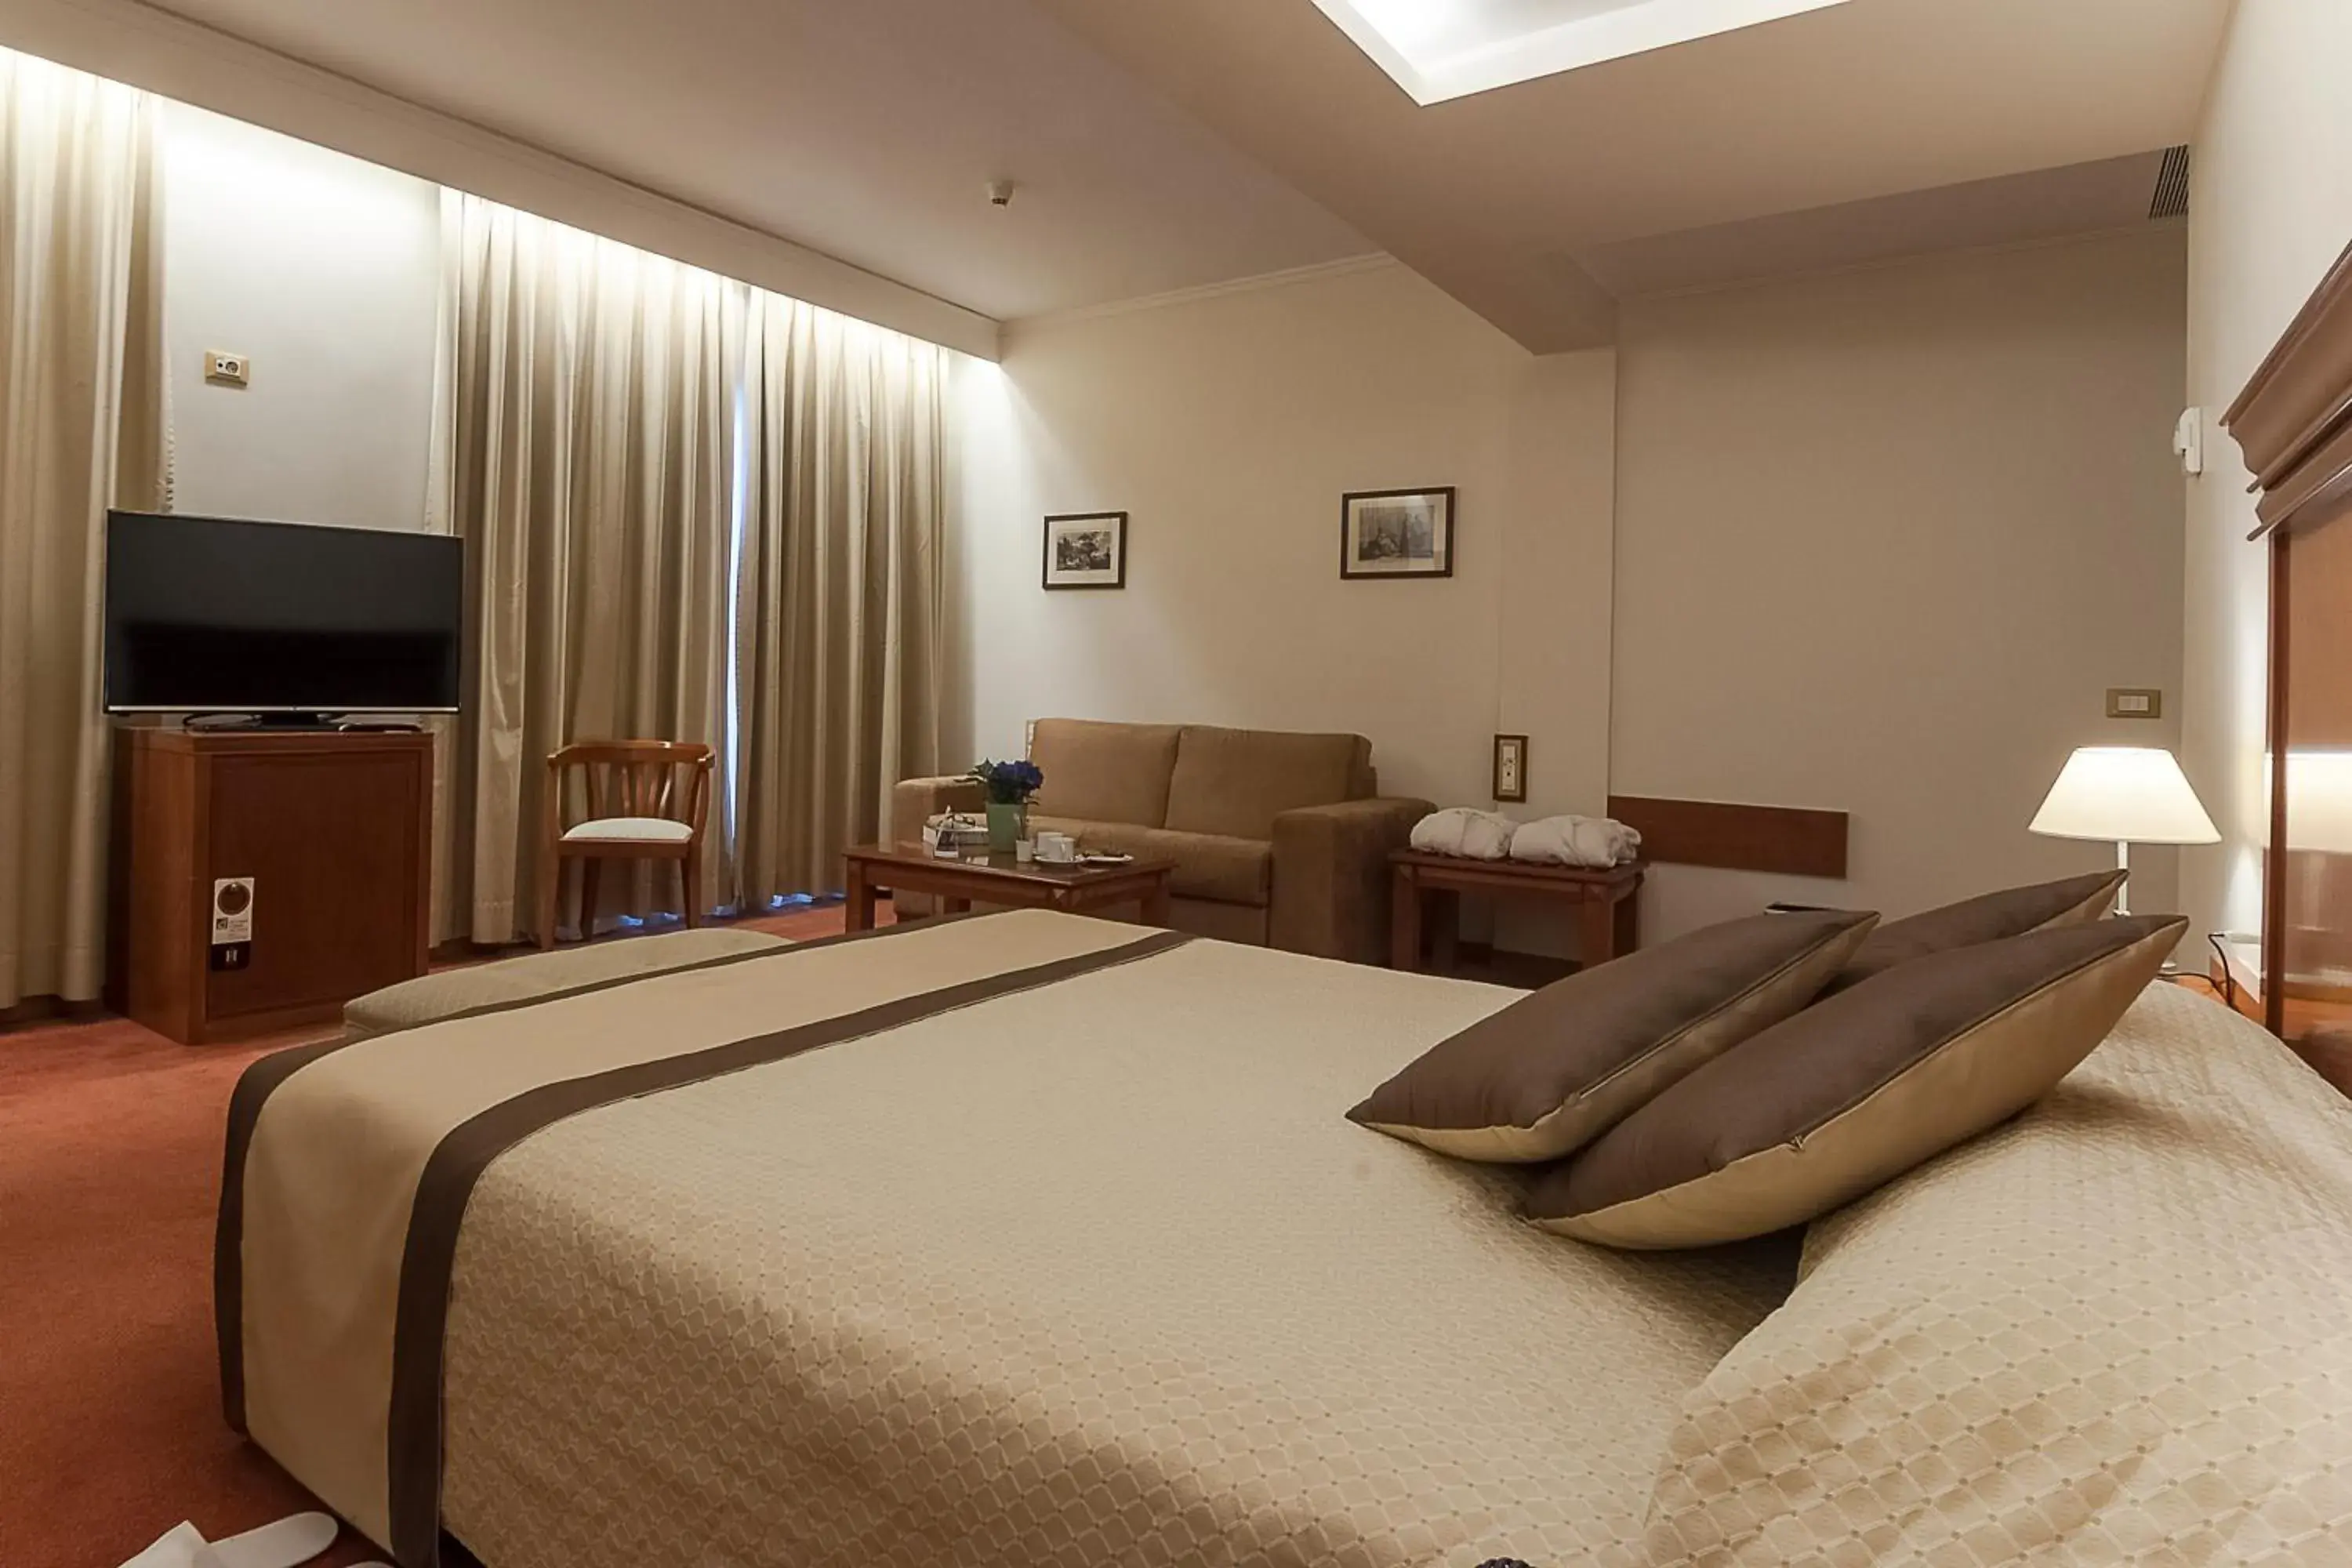 Bed, Room Photo in Ilissos